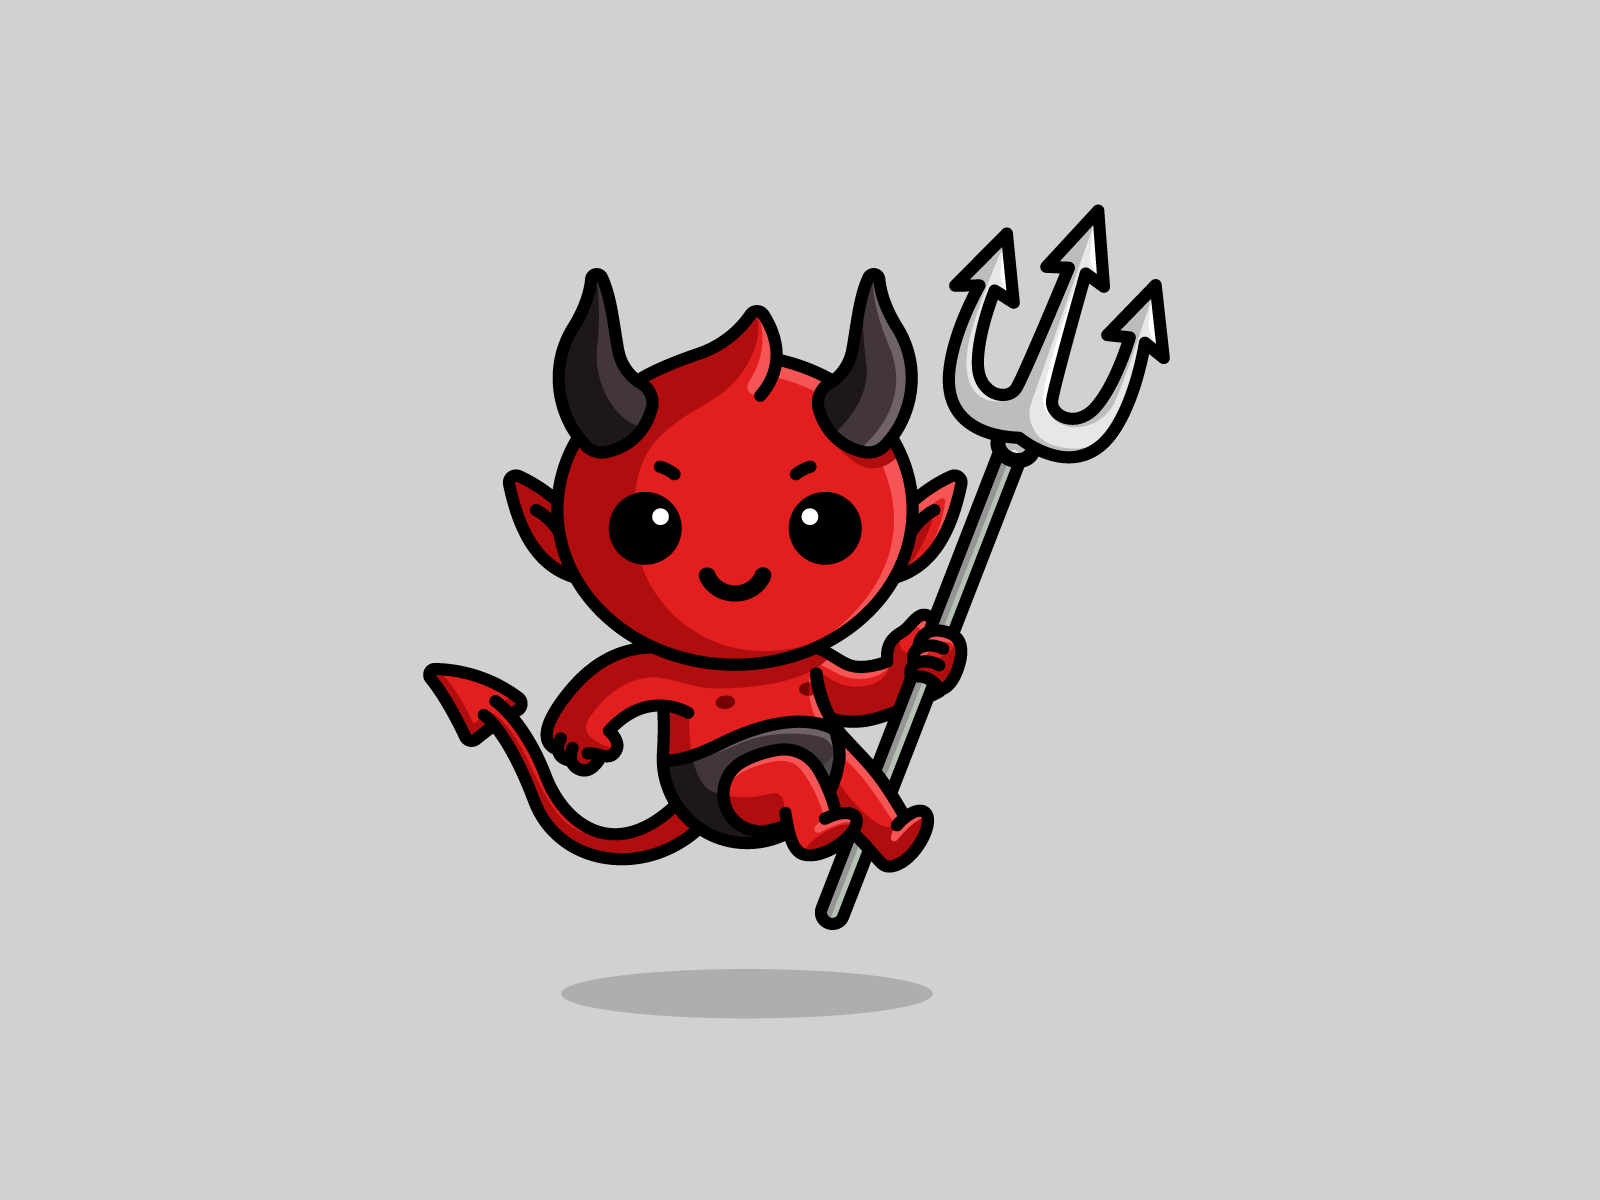 Devil angel logo template stock illustration. Illustration of scary -  167878749